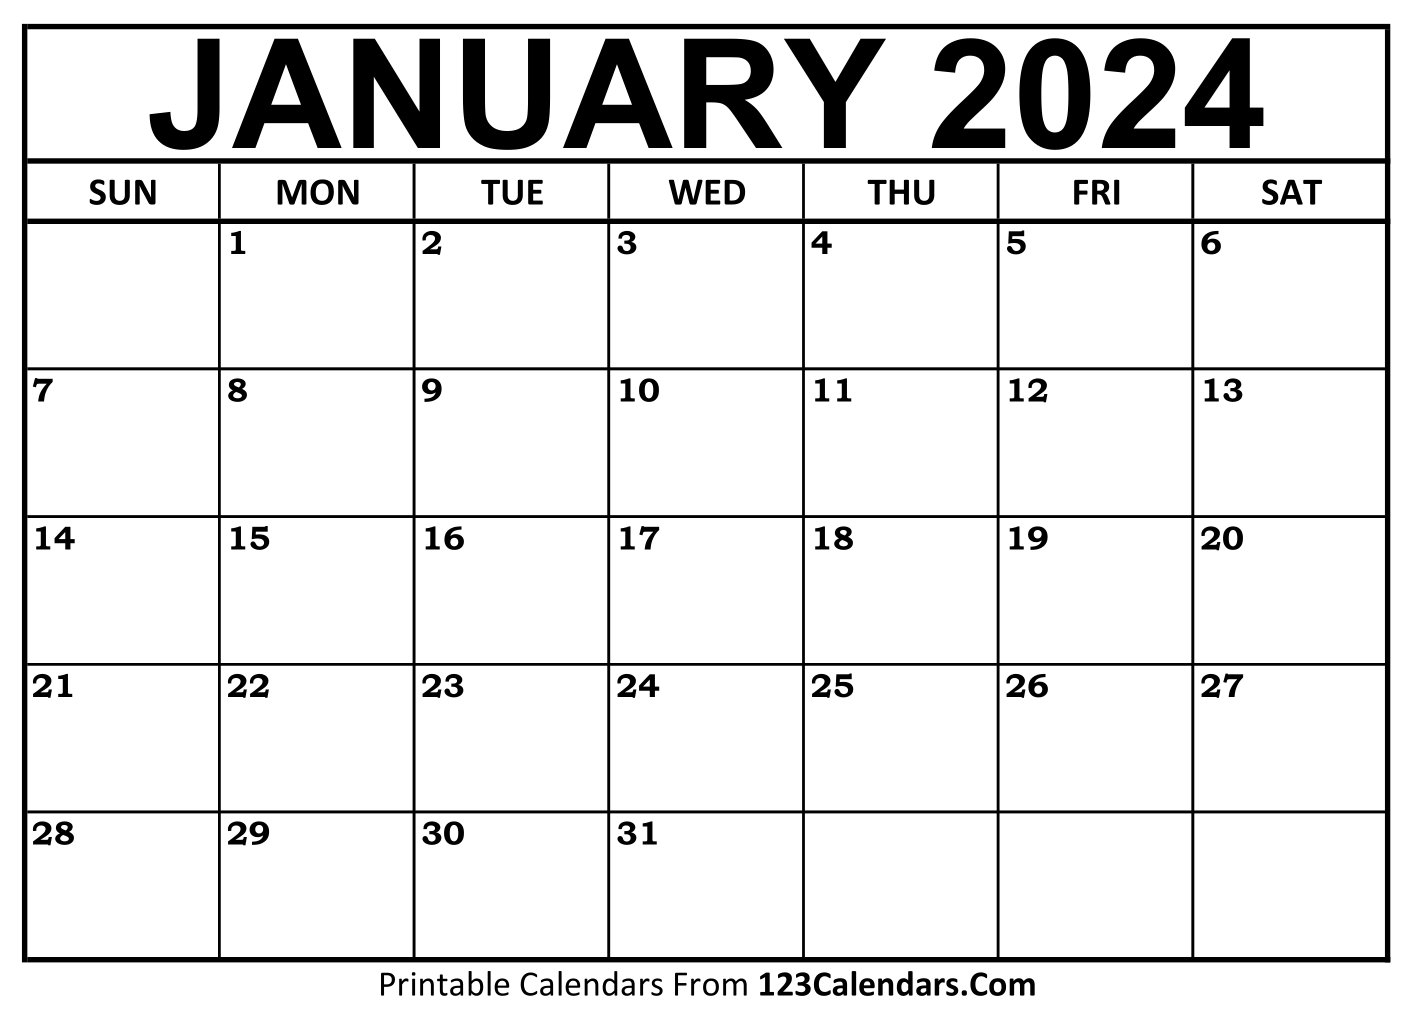 Printable January 2024 Calendar Templates - 123Calendars for Jan Printable Calendar 2024